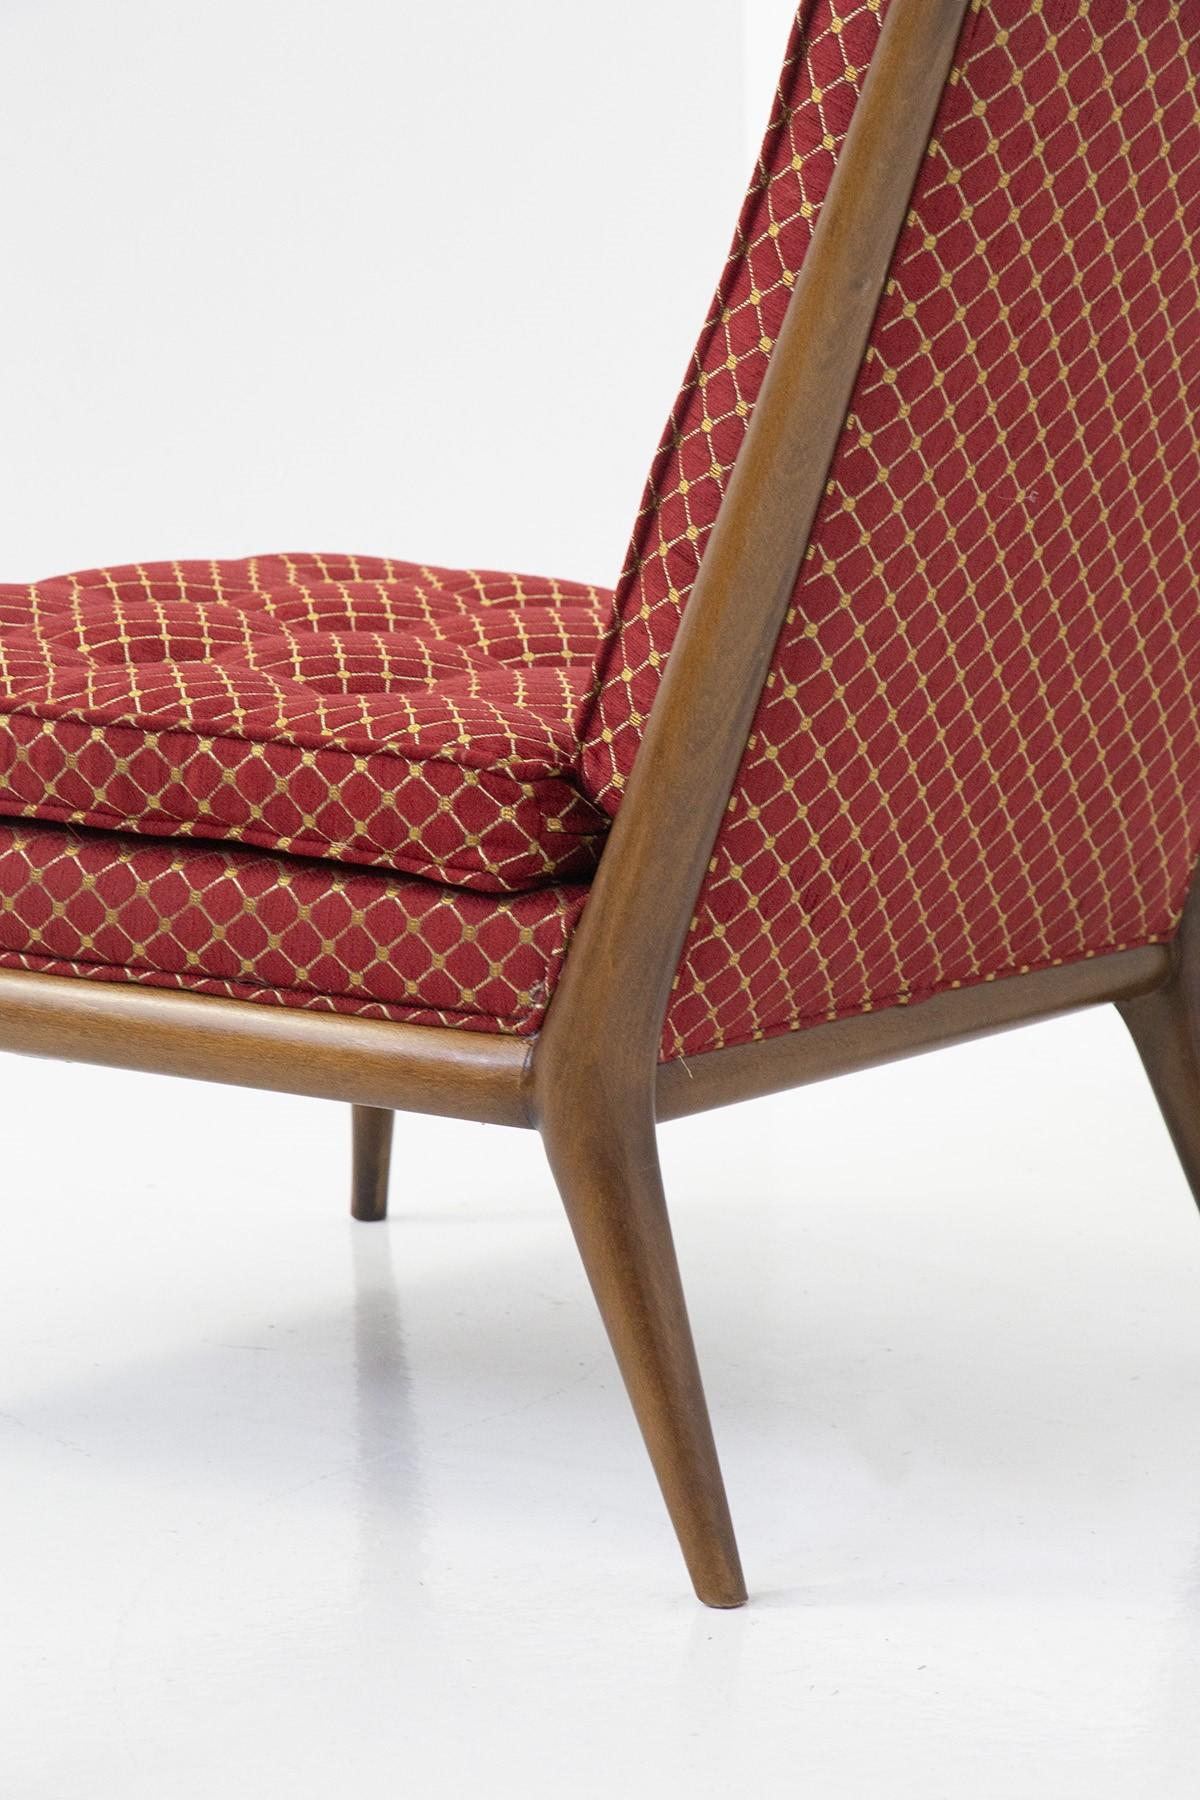 American T.H. Robsjohn-Gibbings Slipper Lounge Chairs a Pair for Widdicomb USA 1955 For Sale